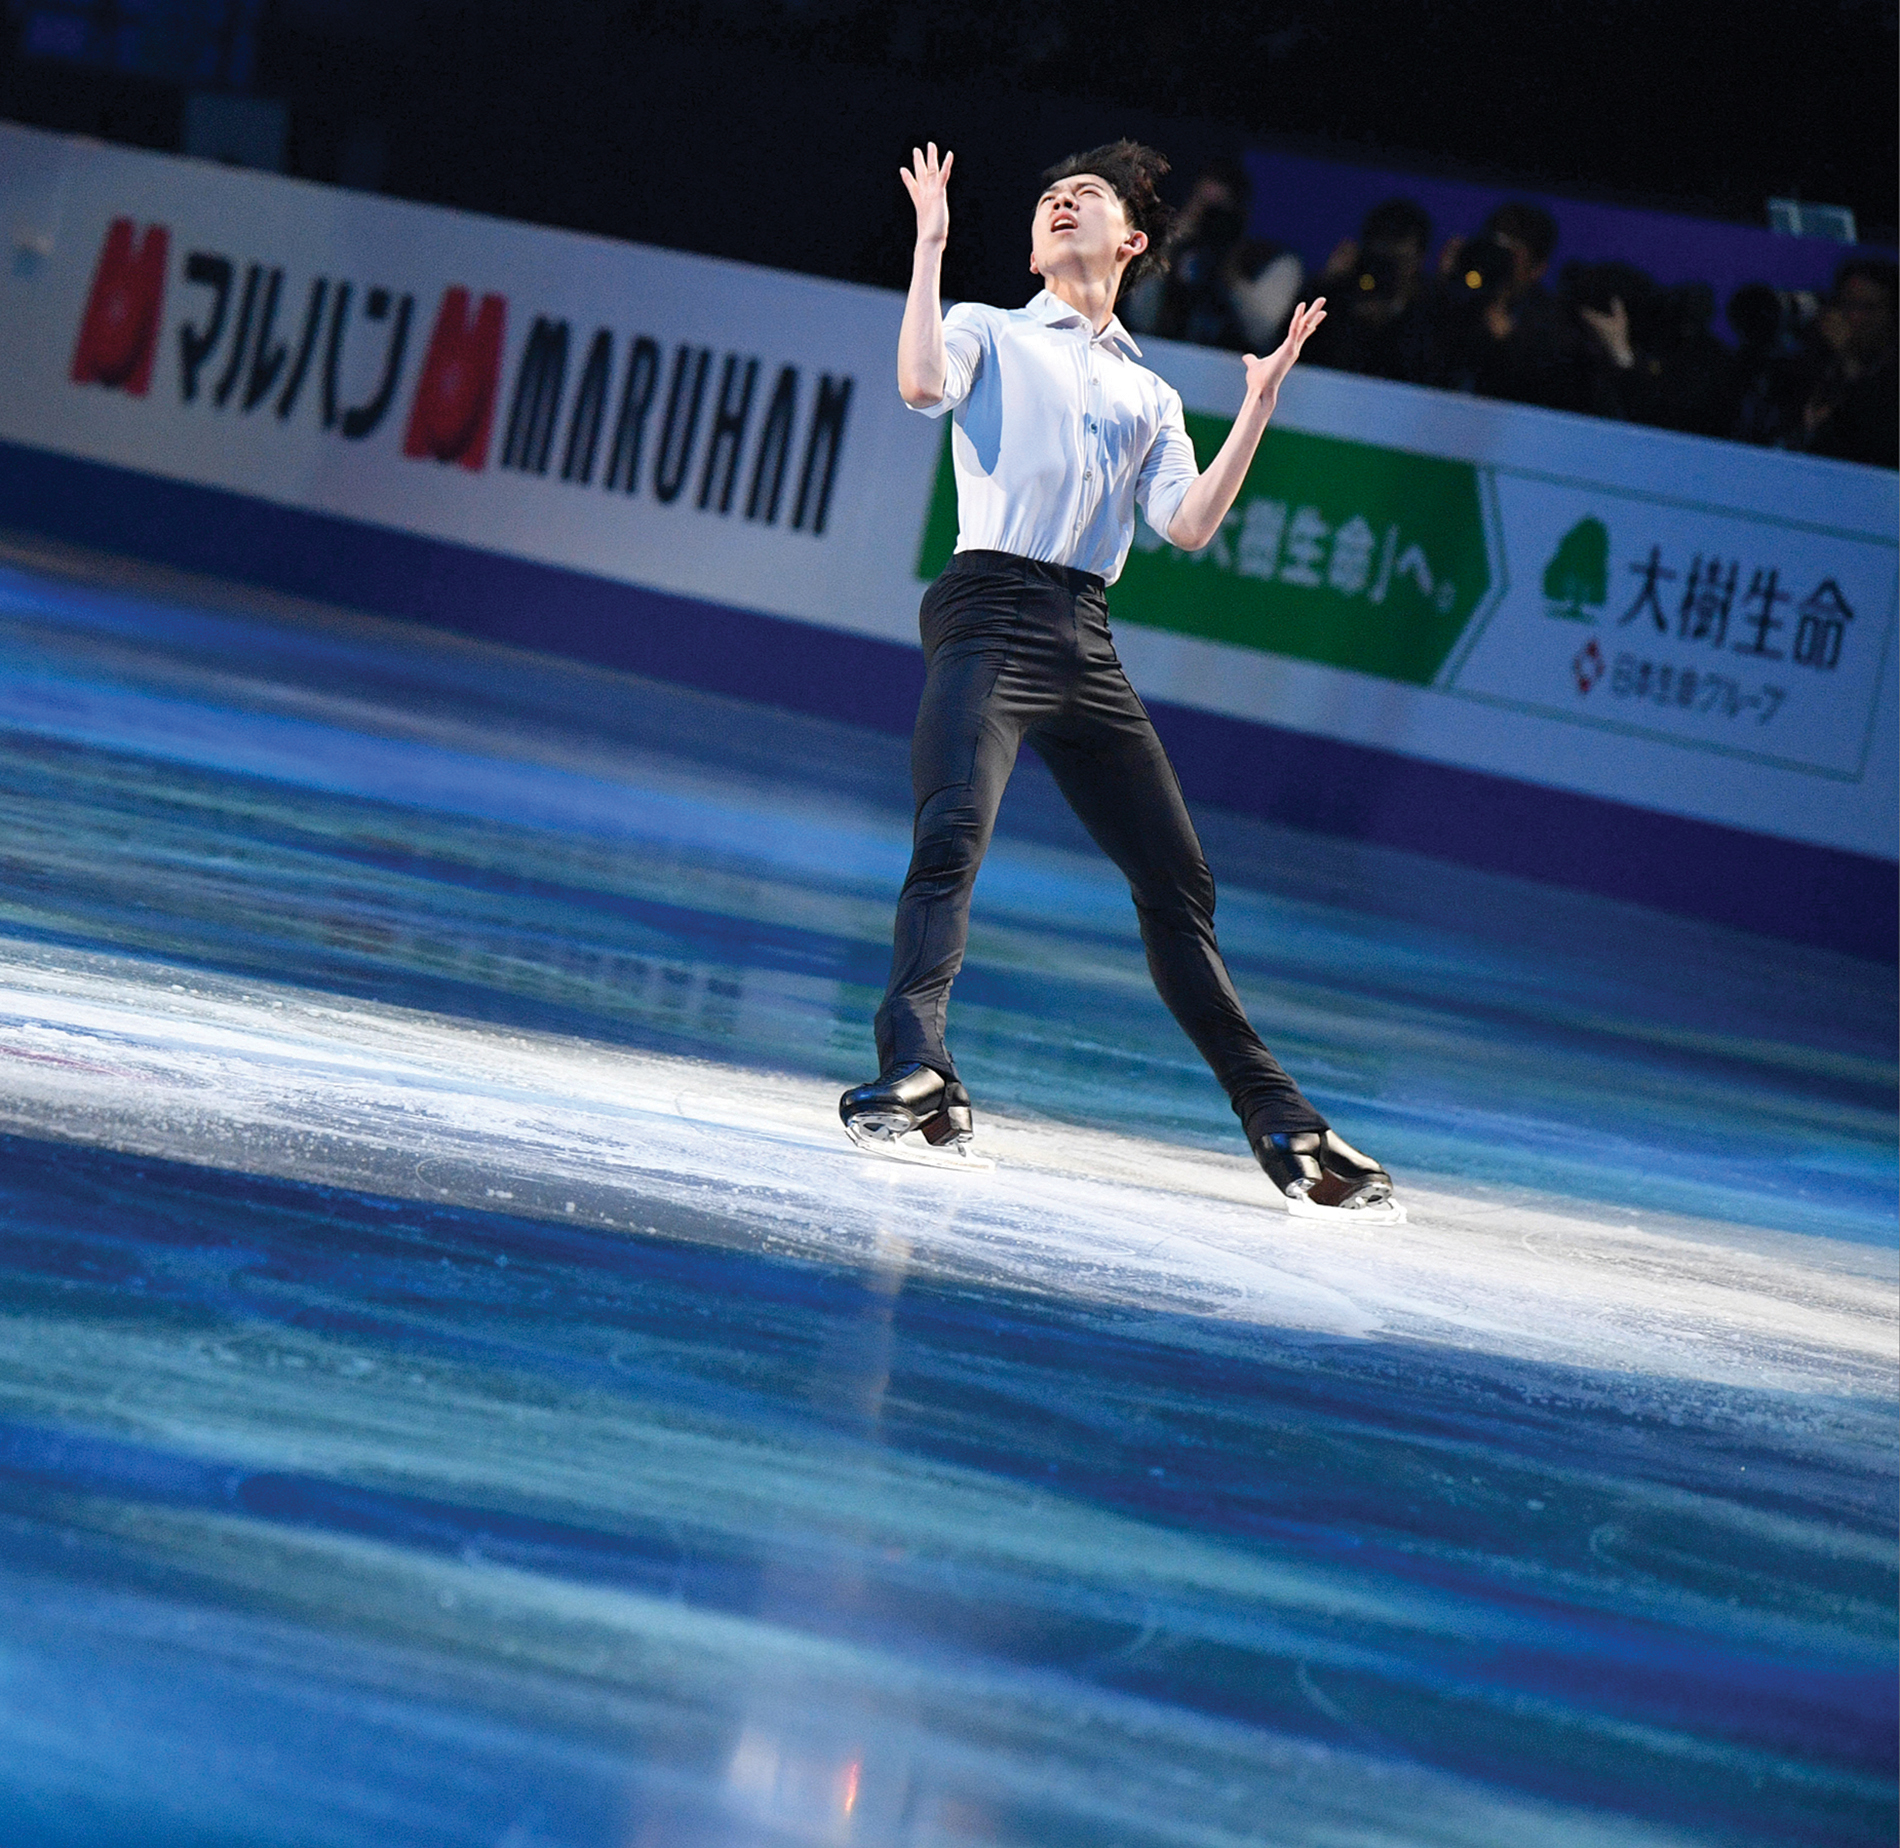 Zhou on the ice